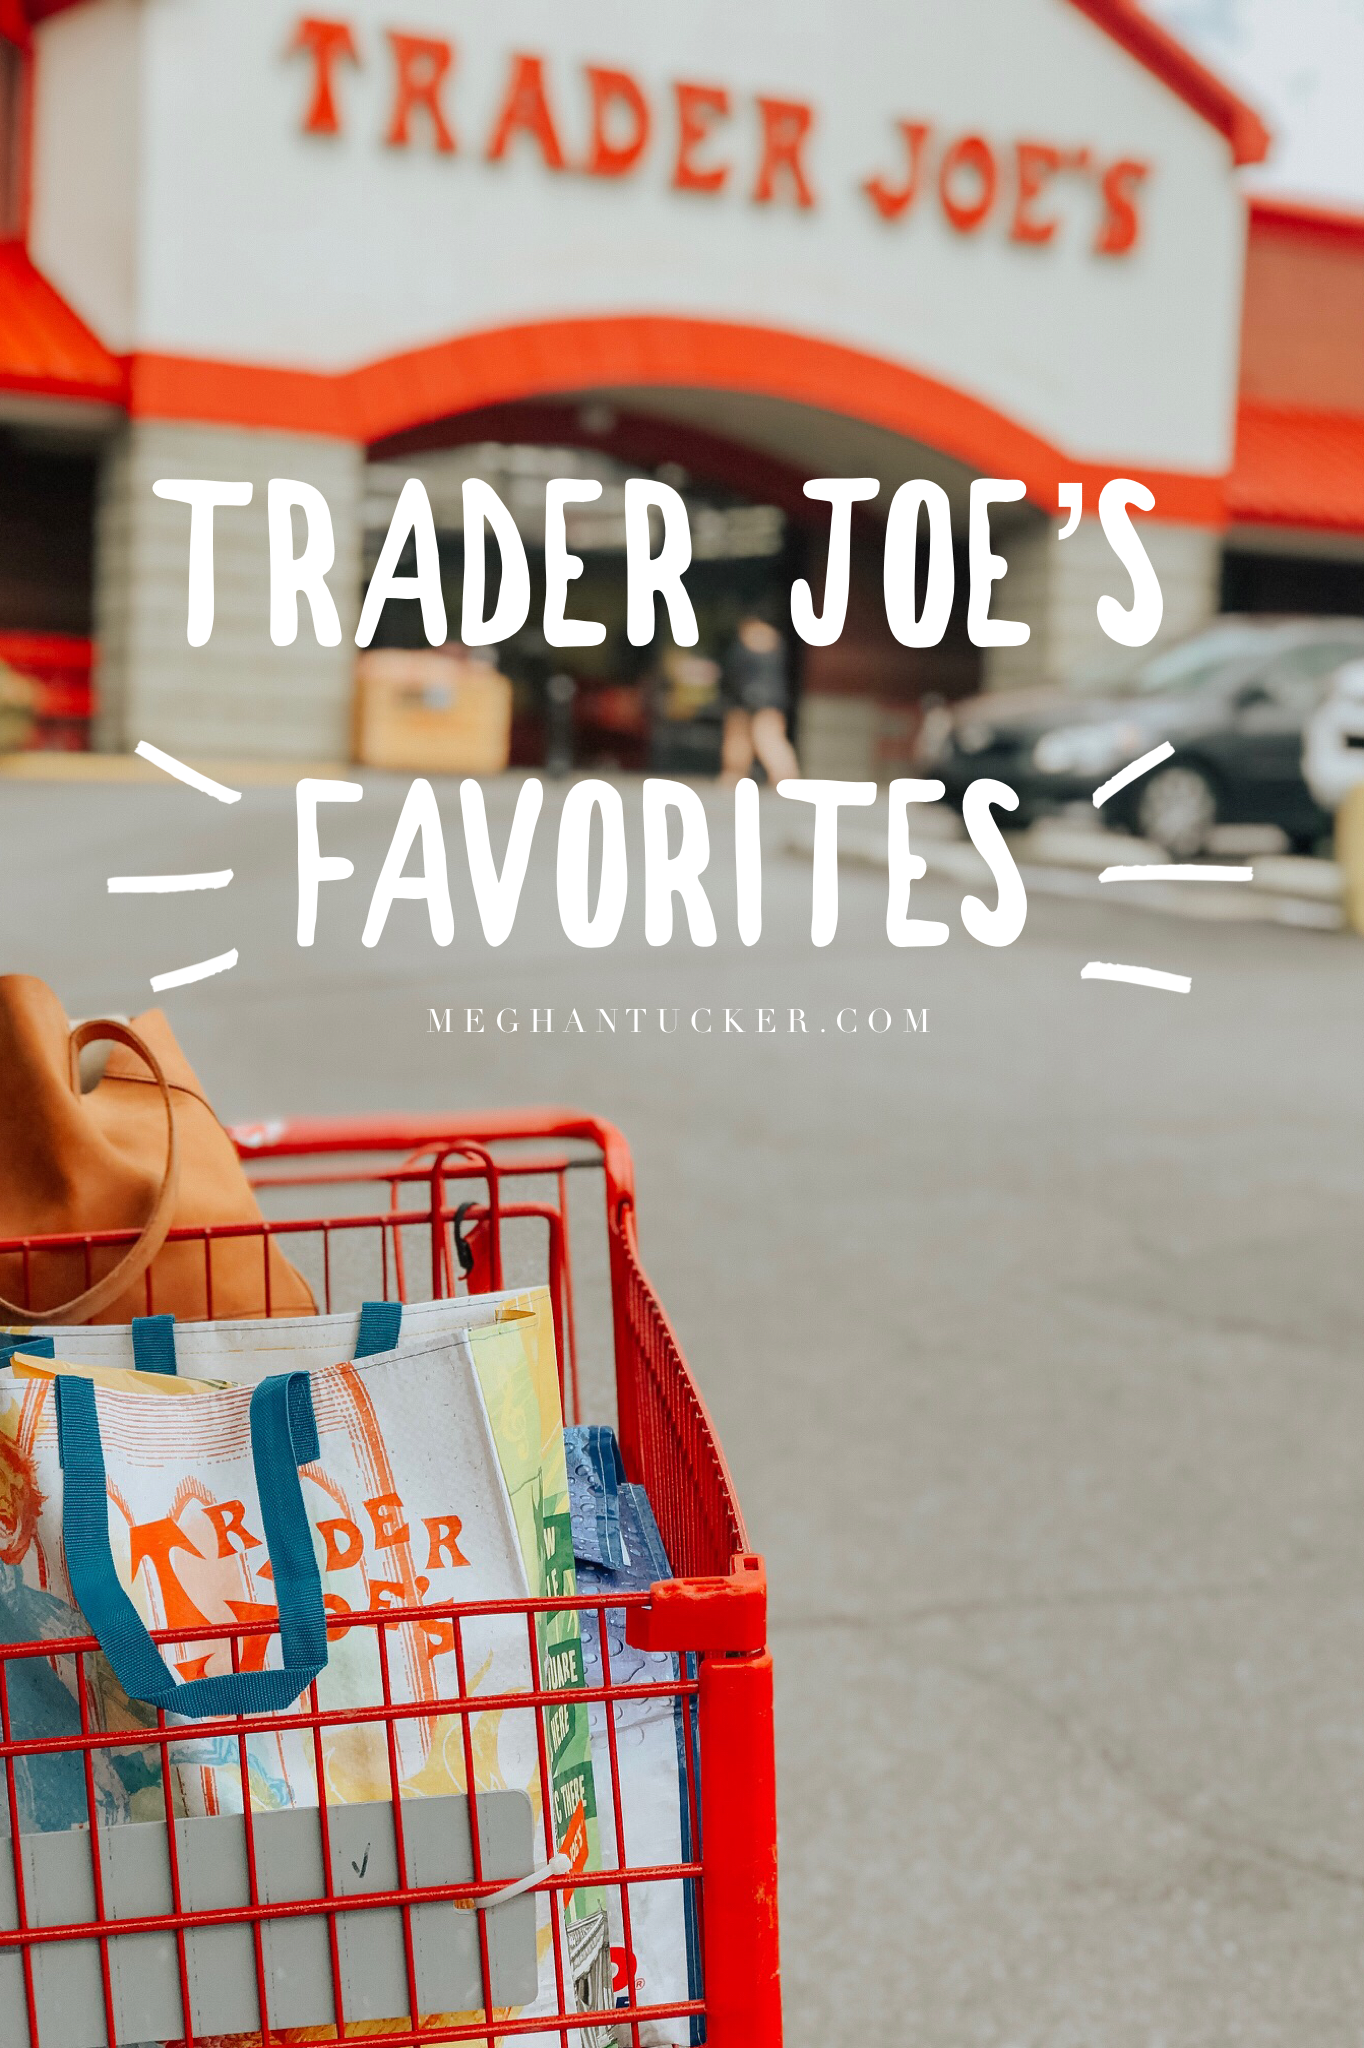 Our Trader Joe’s Favorites